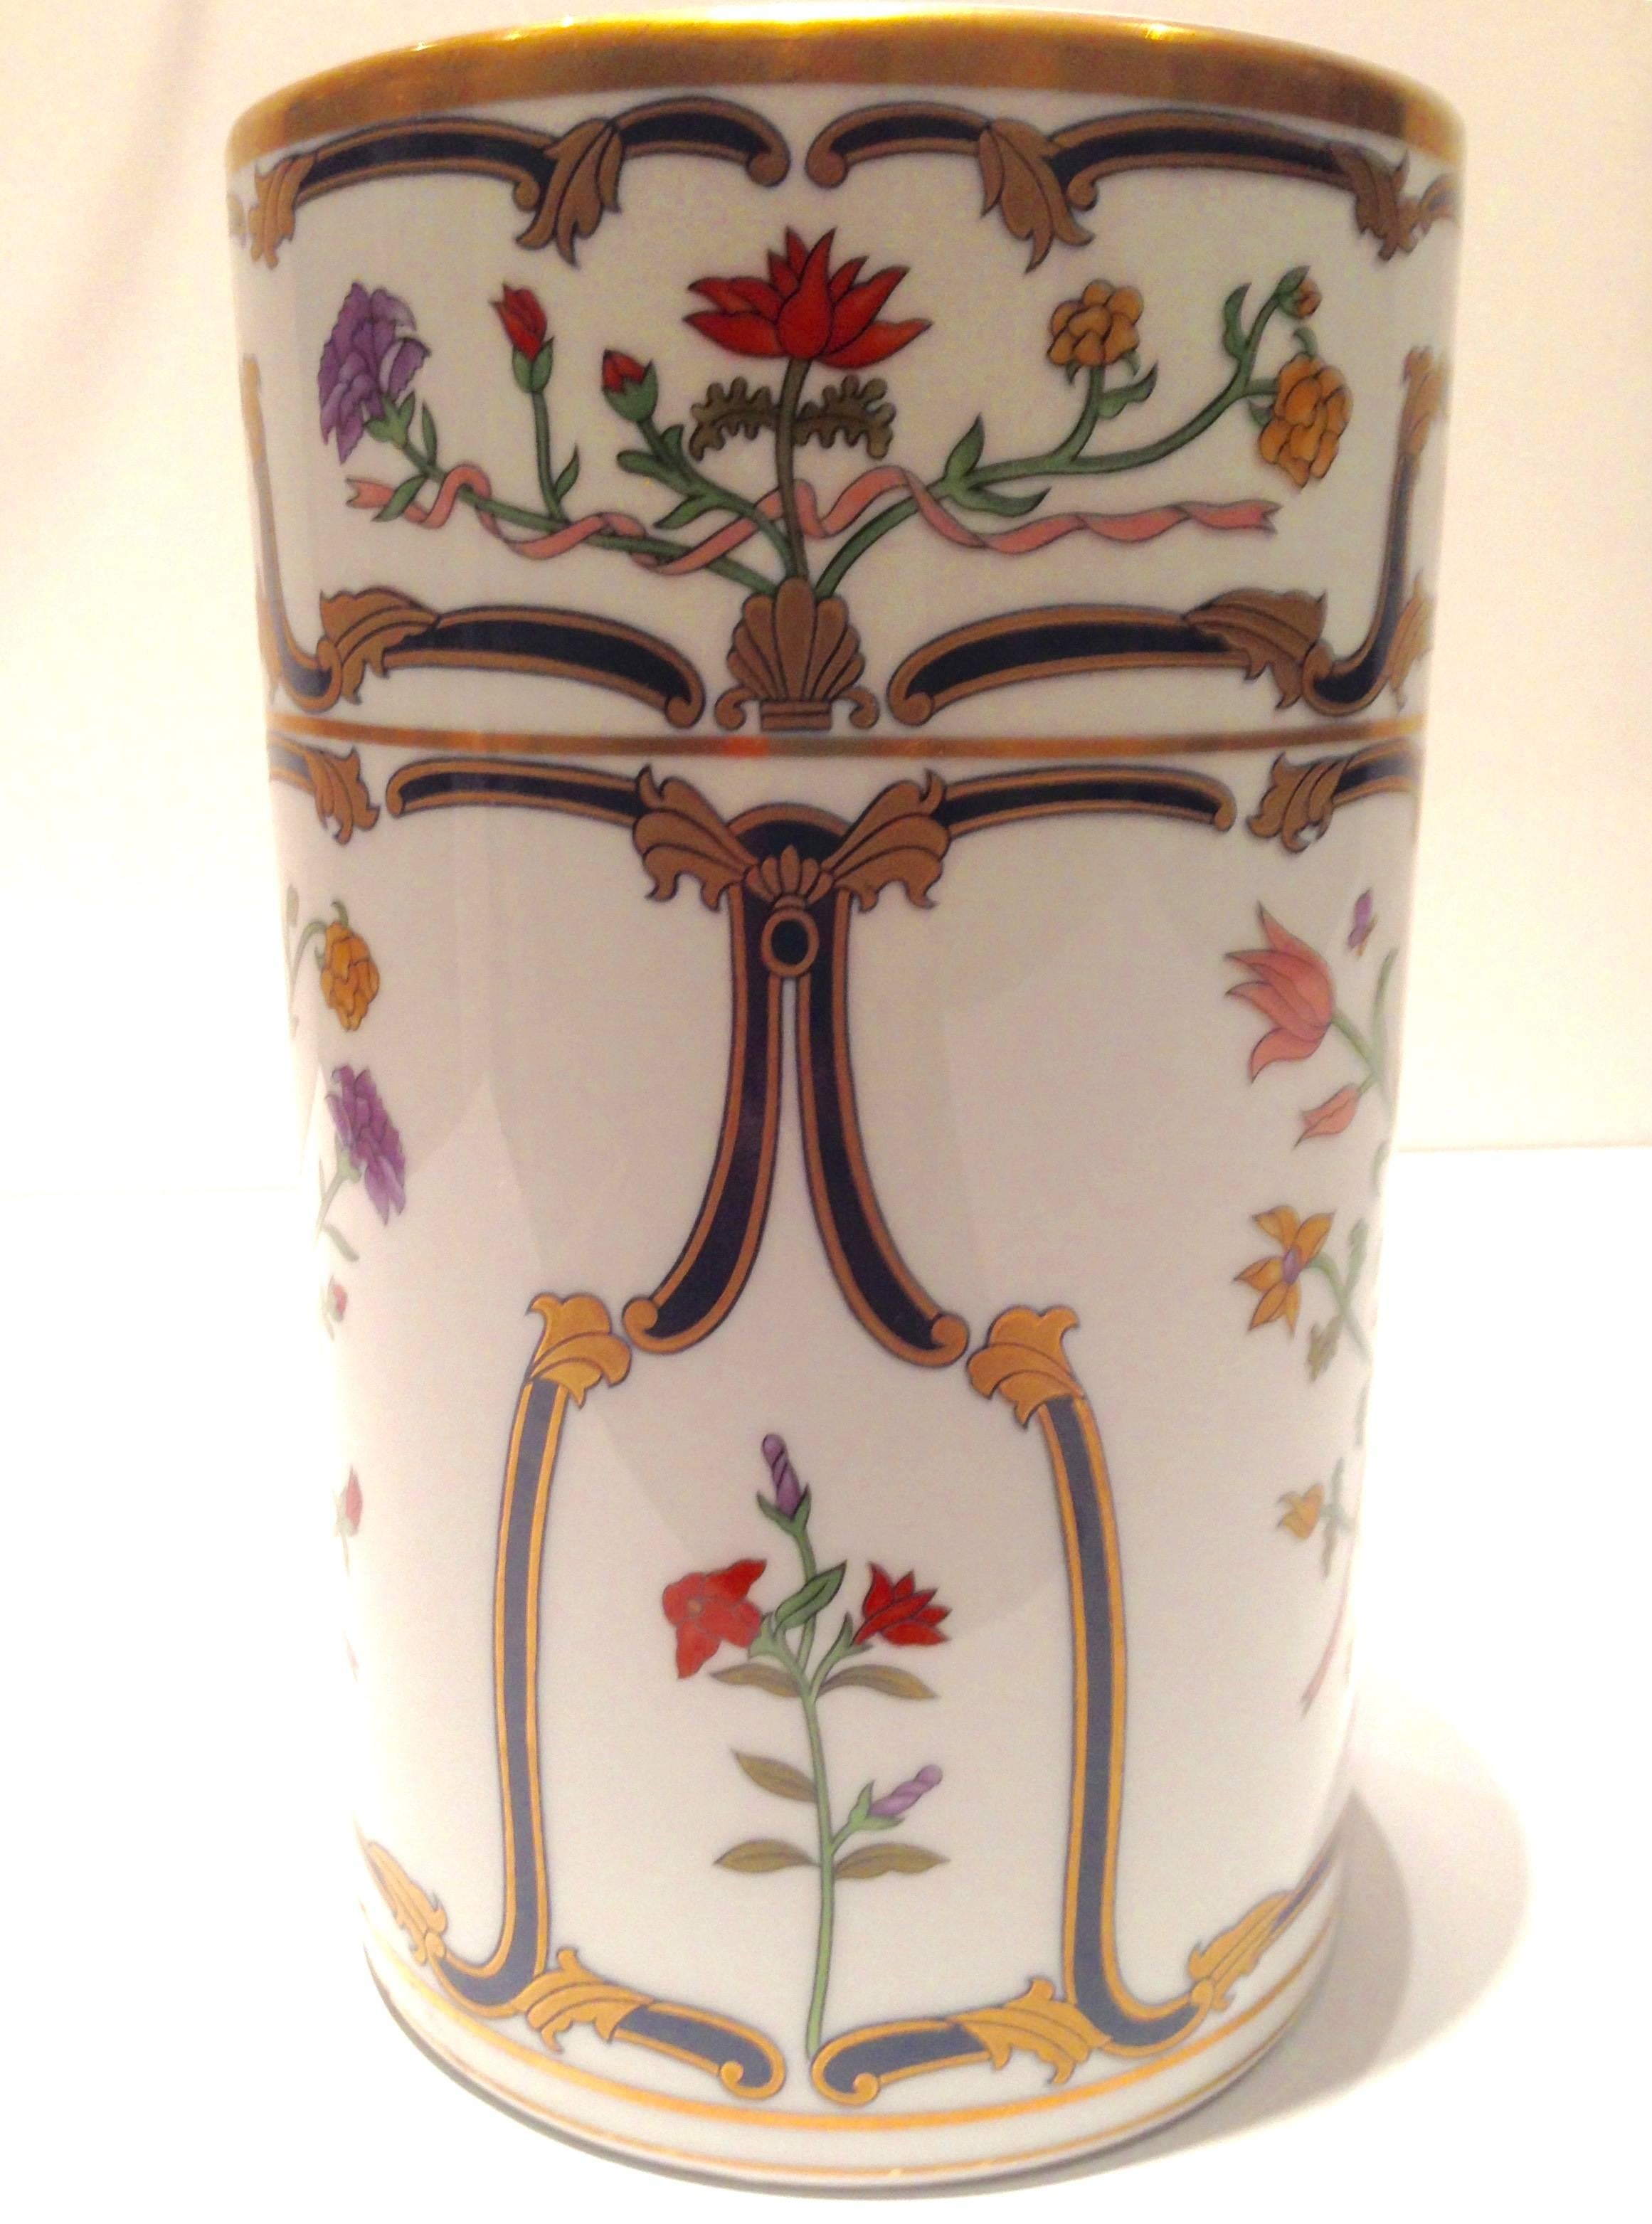 Christian Dior porcelain floral motif vase in the Renaissance pattern with gold detail on rim. Signed 